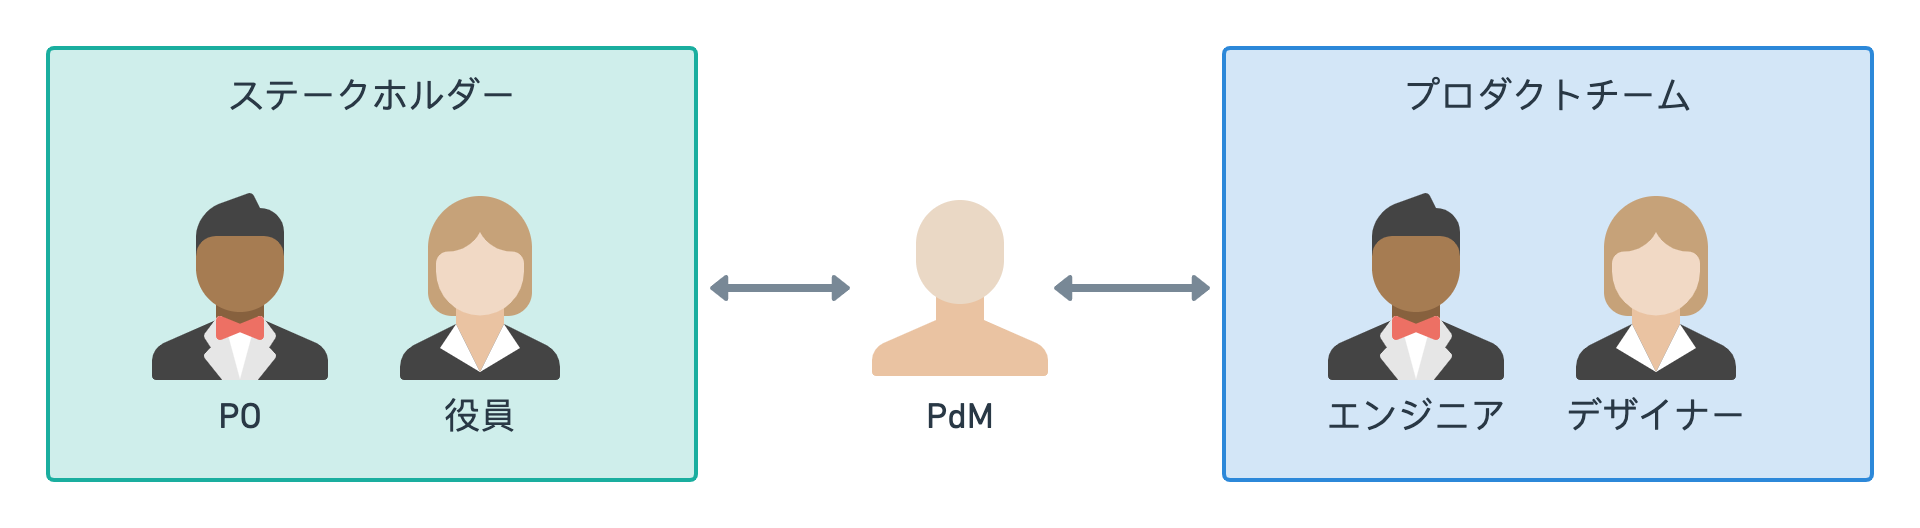 PdMの役割